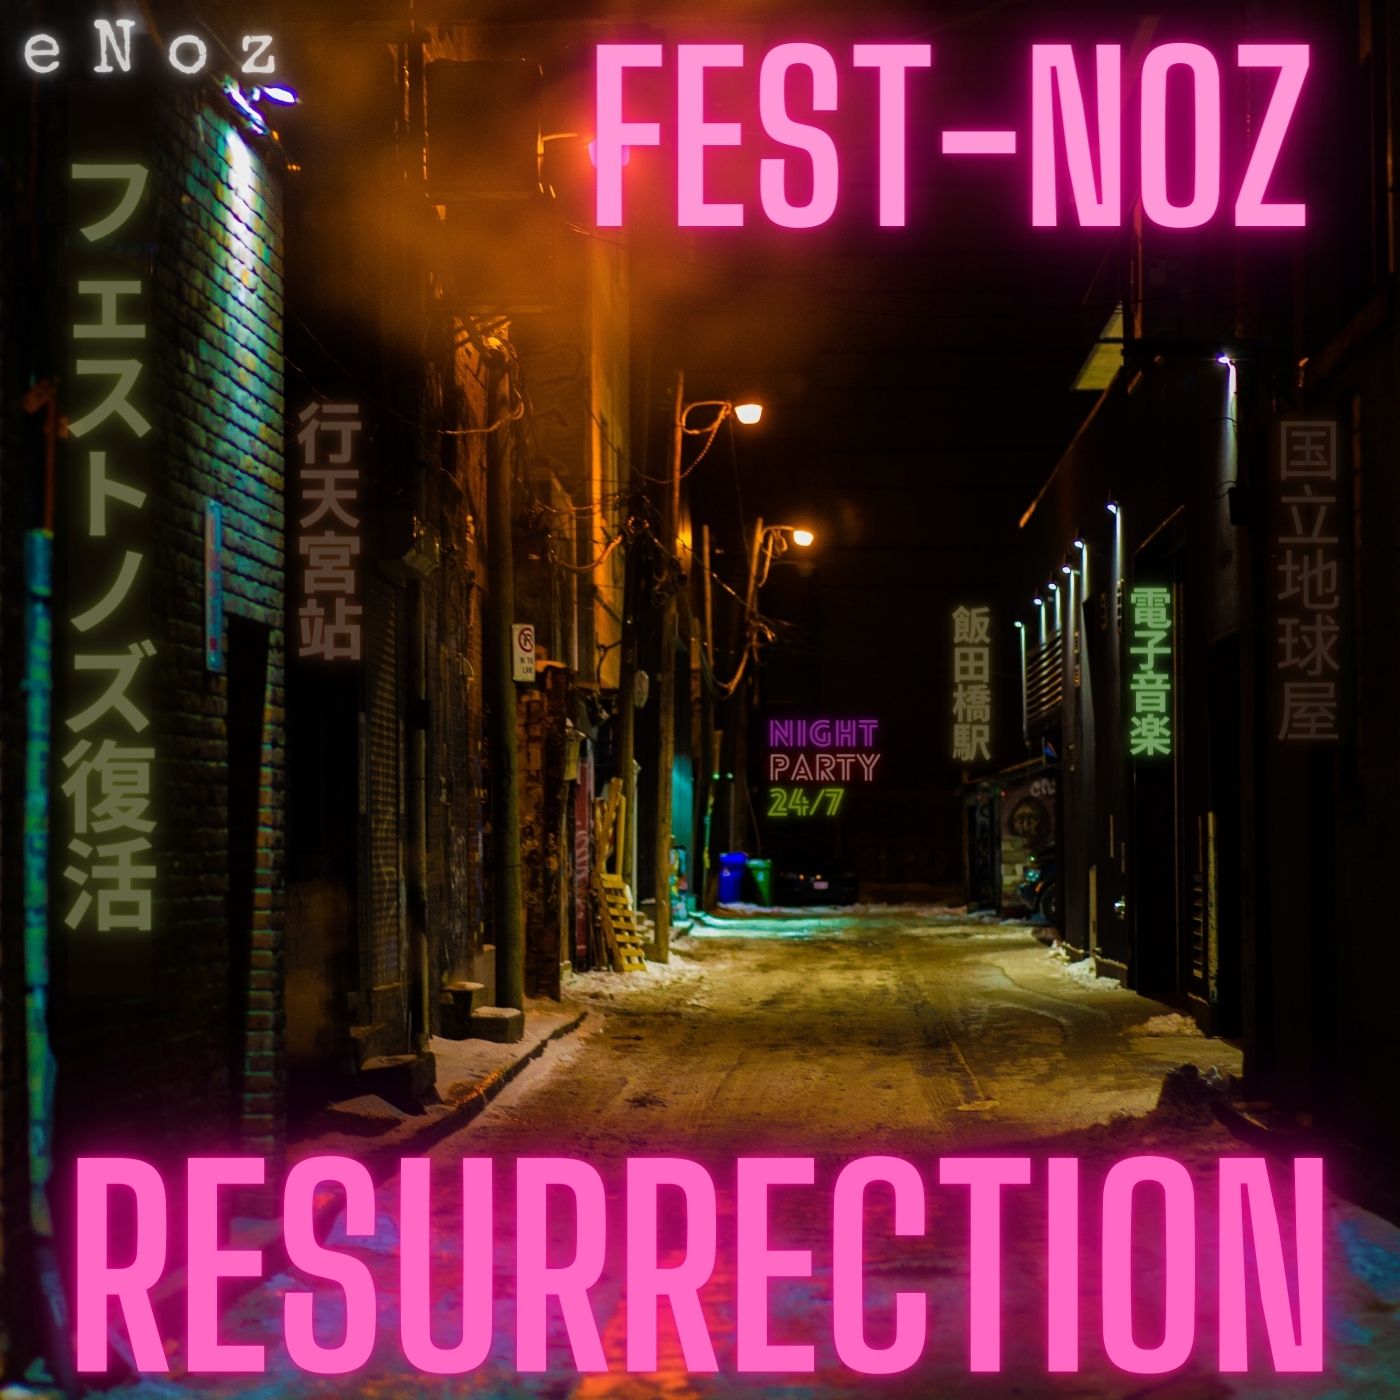 Fest-noz resurrection